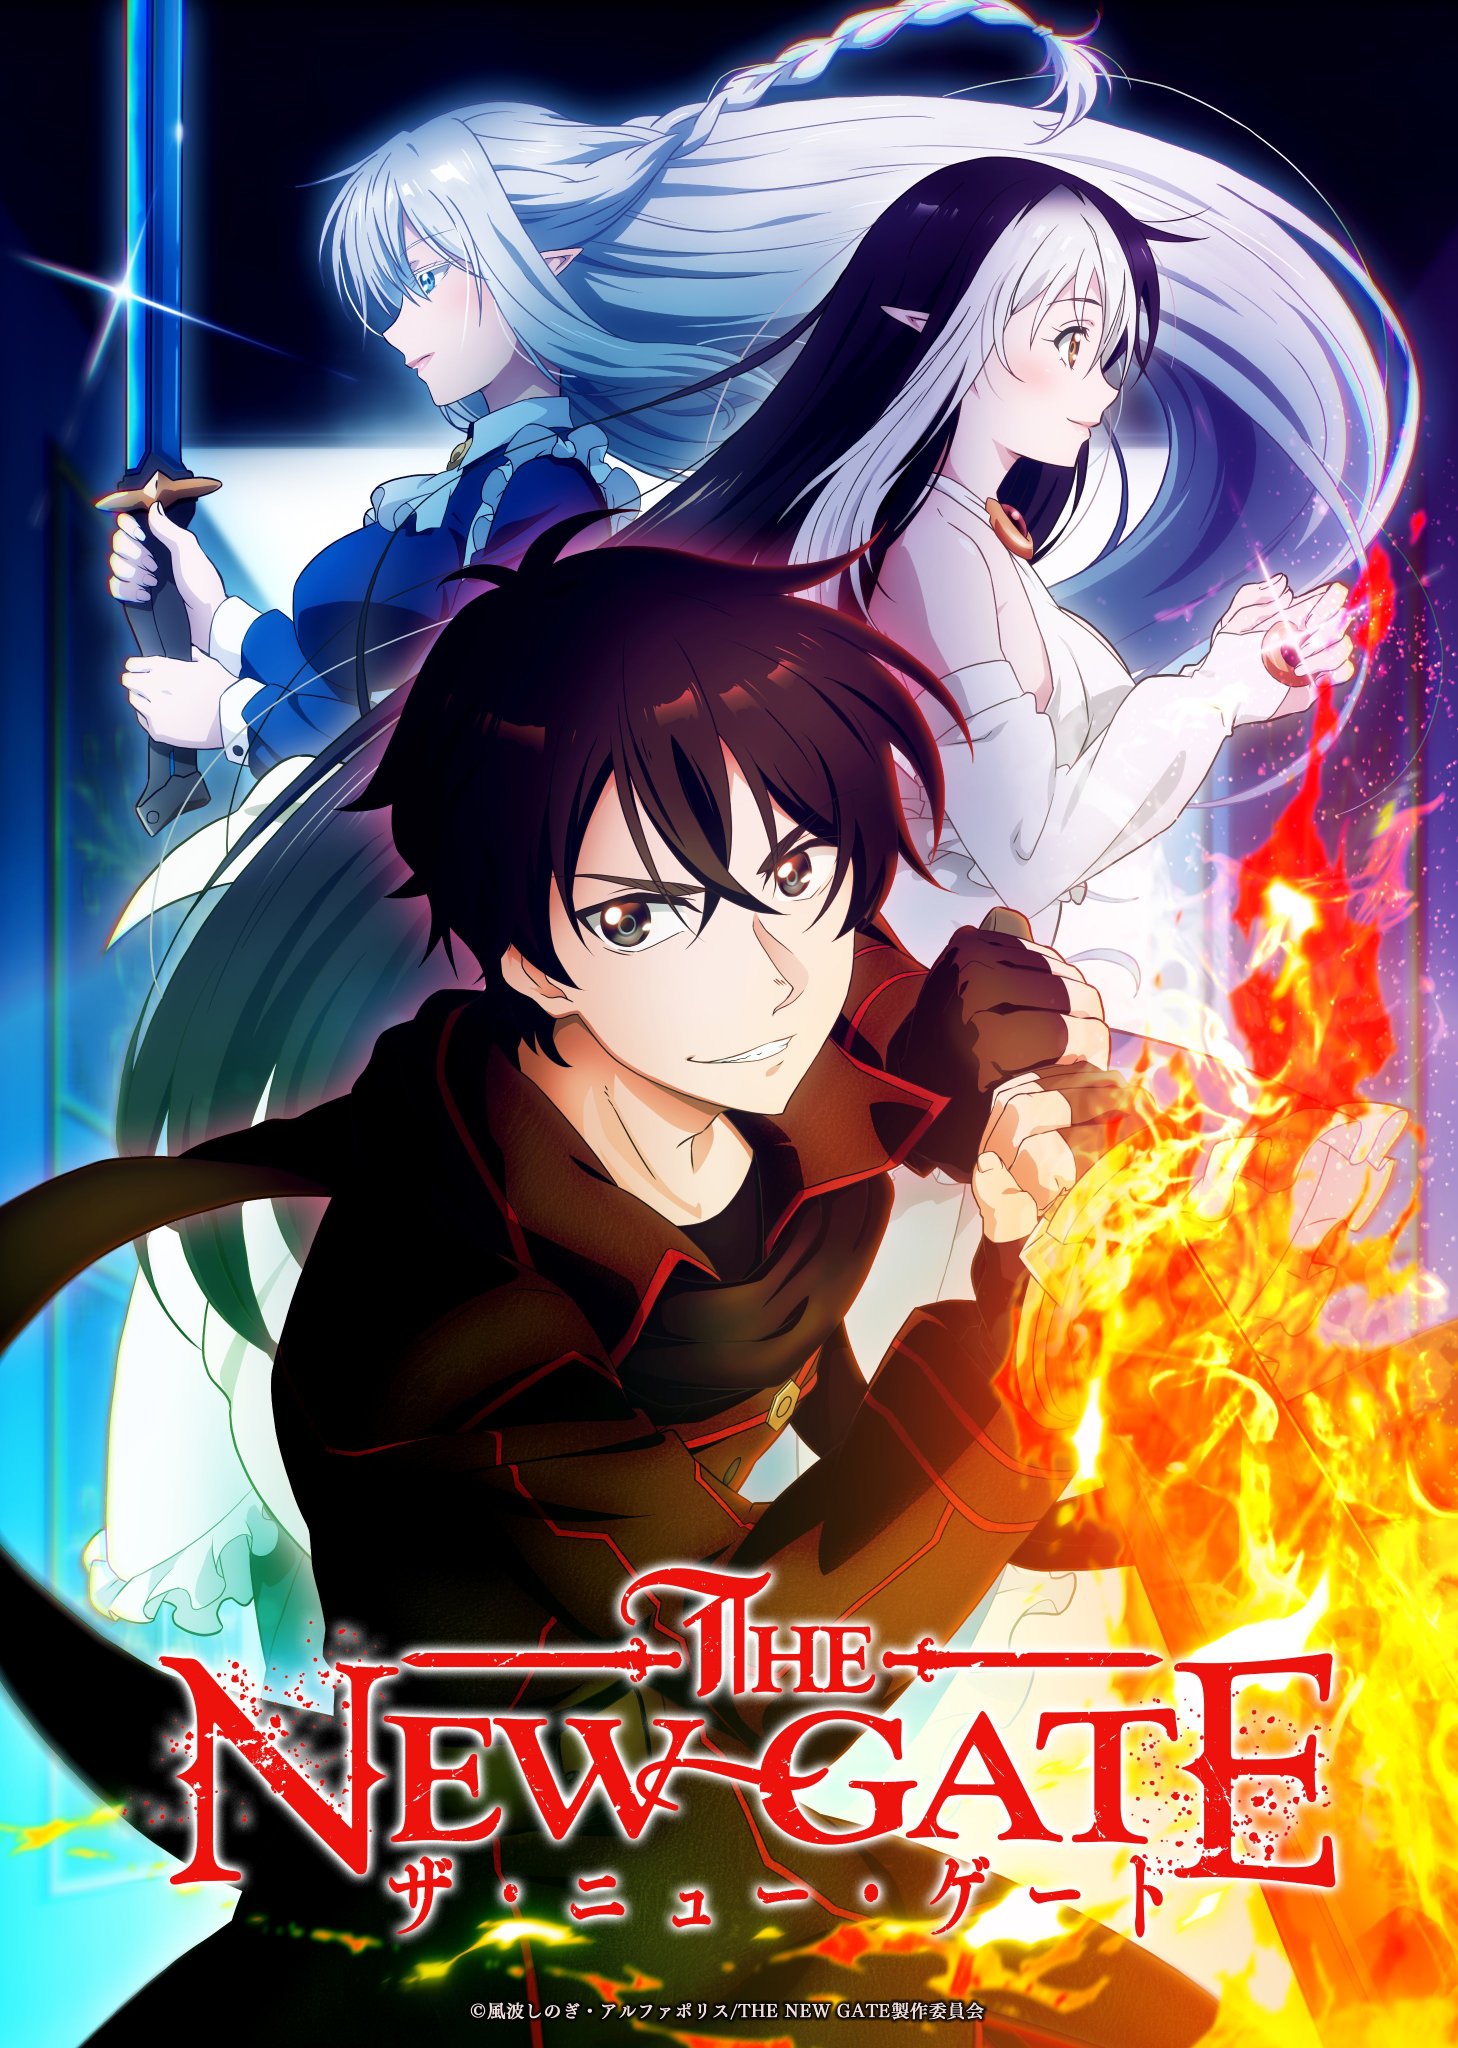 Anime on Demand To Screen Mirai Nikki - News - Anime News Network